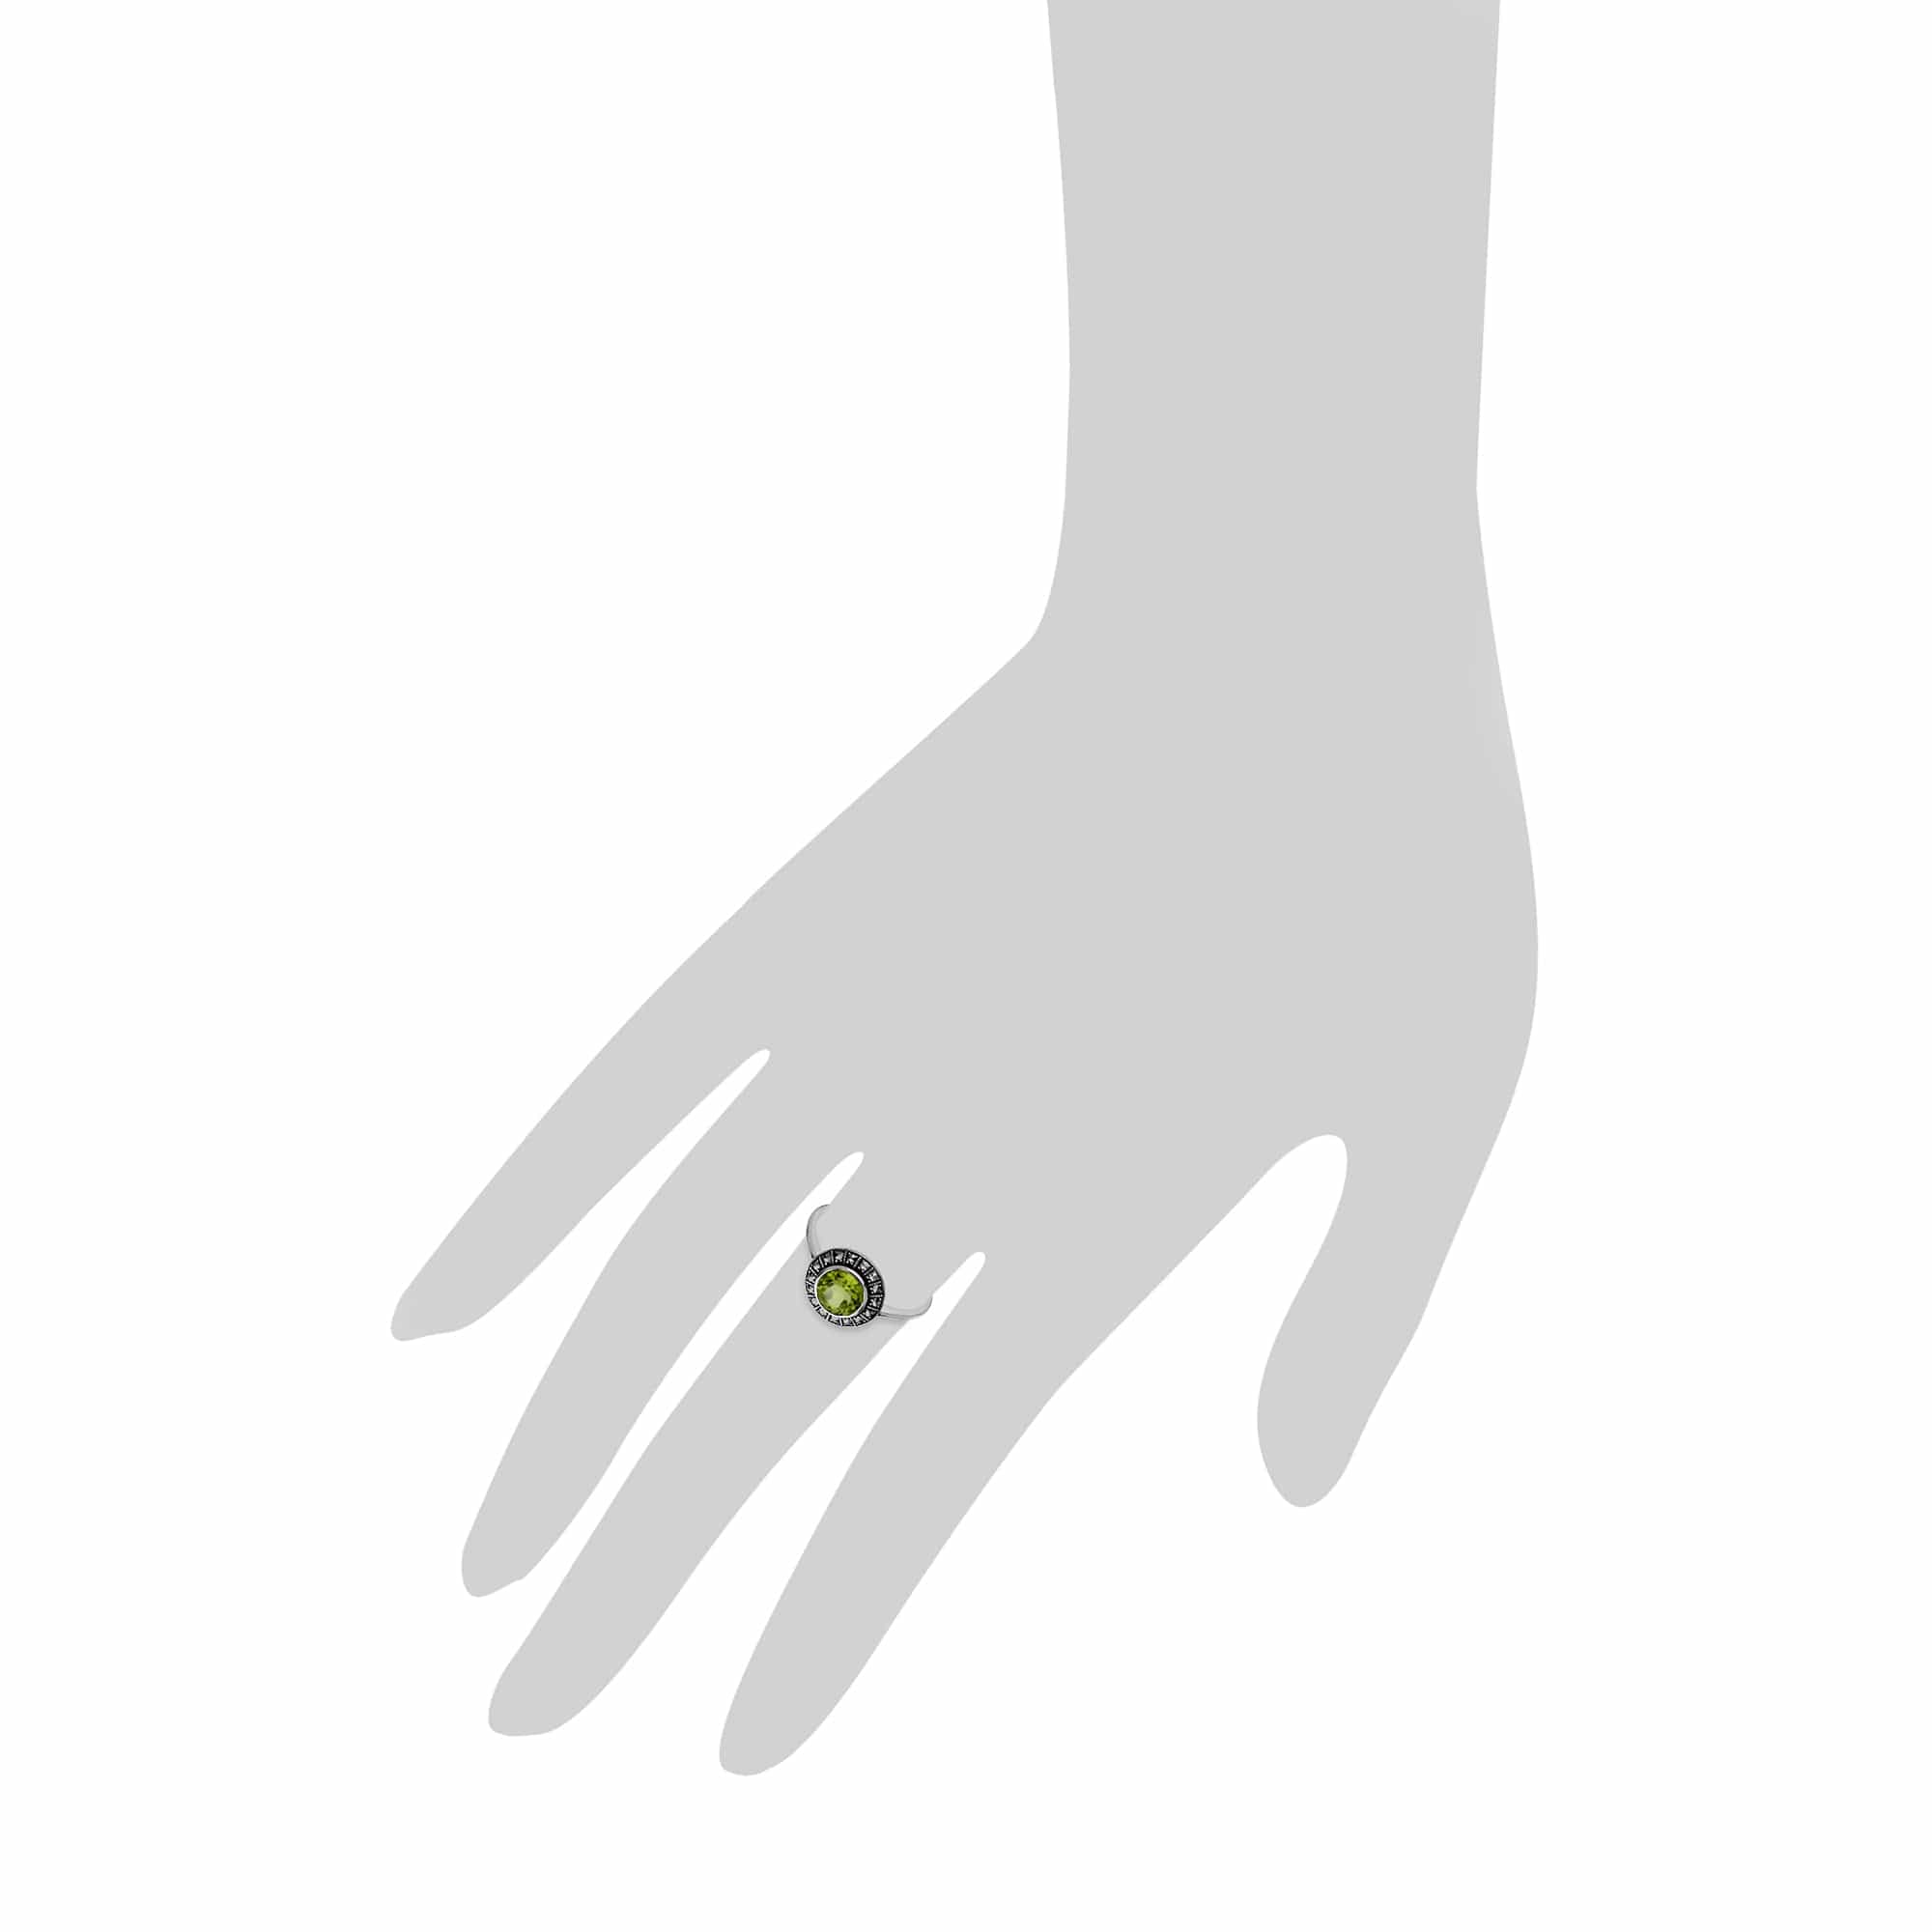 Art Deco Style Round Peridot & Marcasite Halo Ring in 925 Sterling Silver - Gemondo